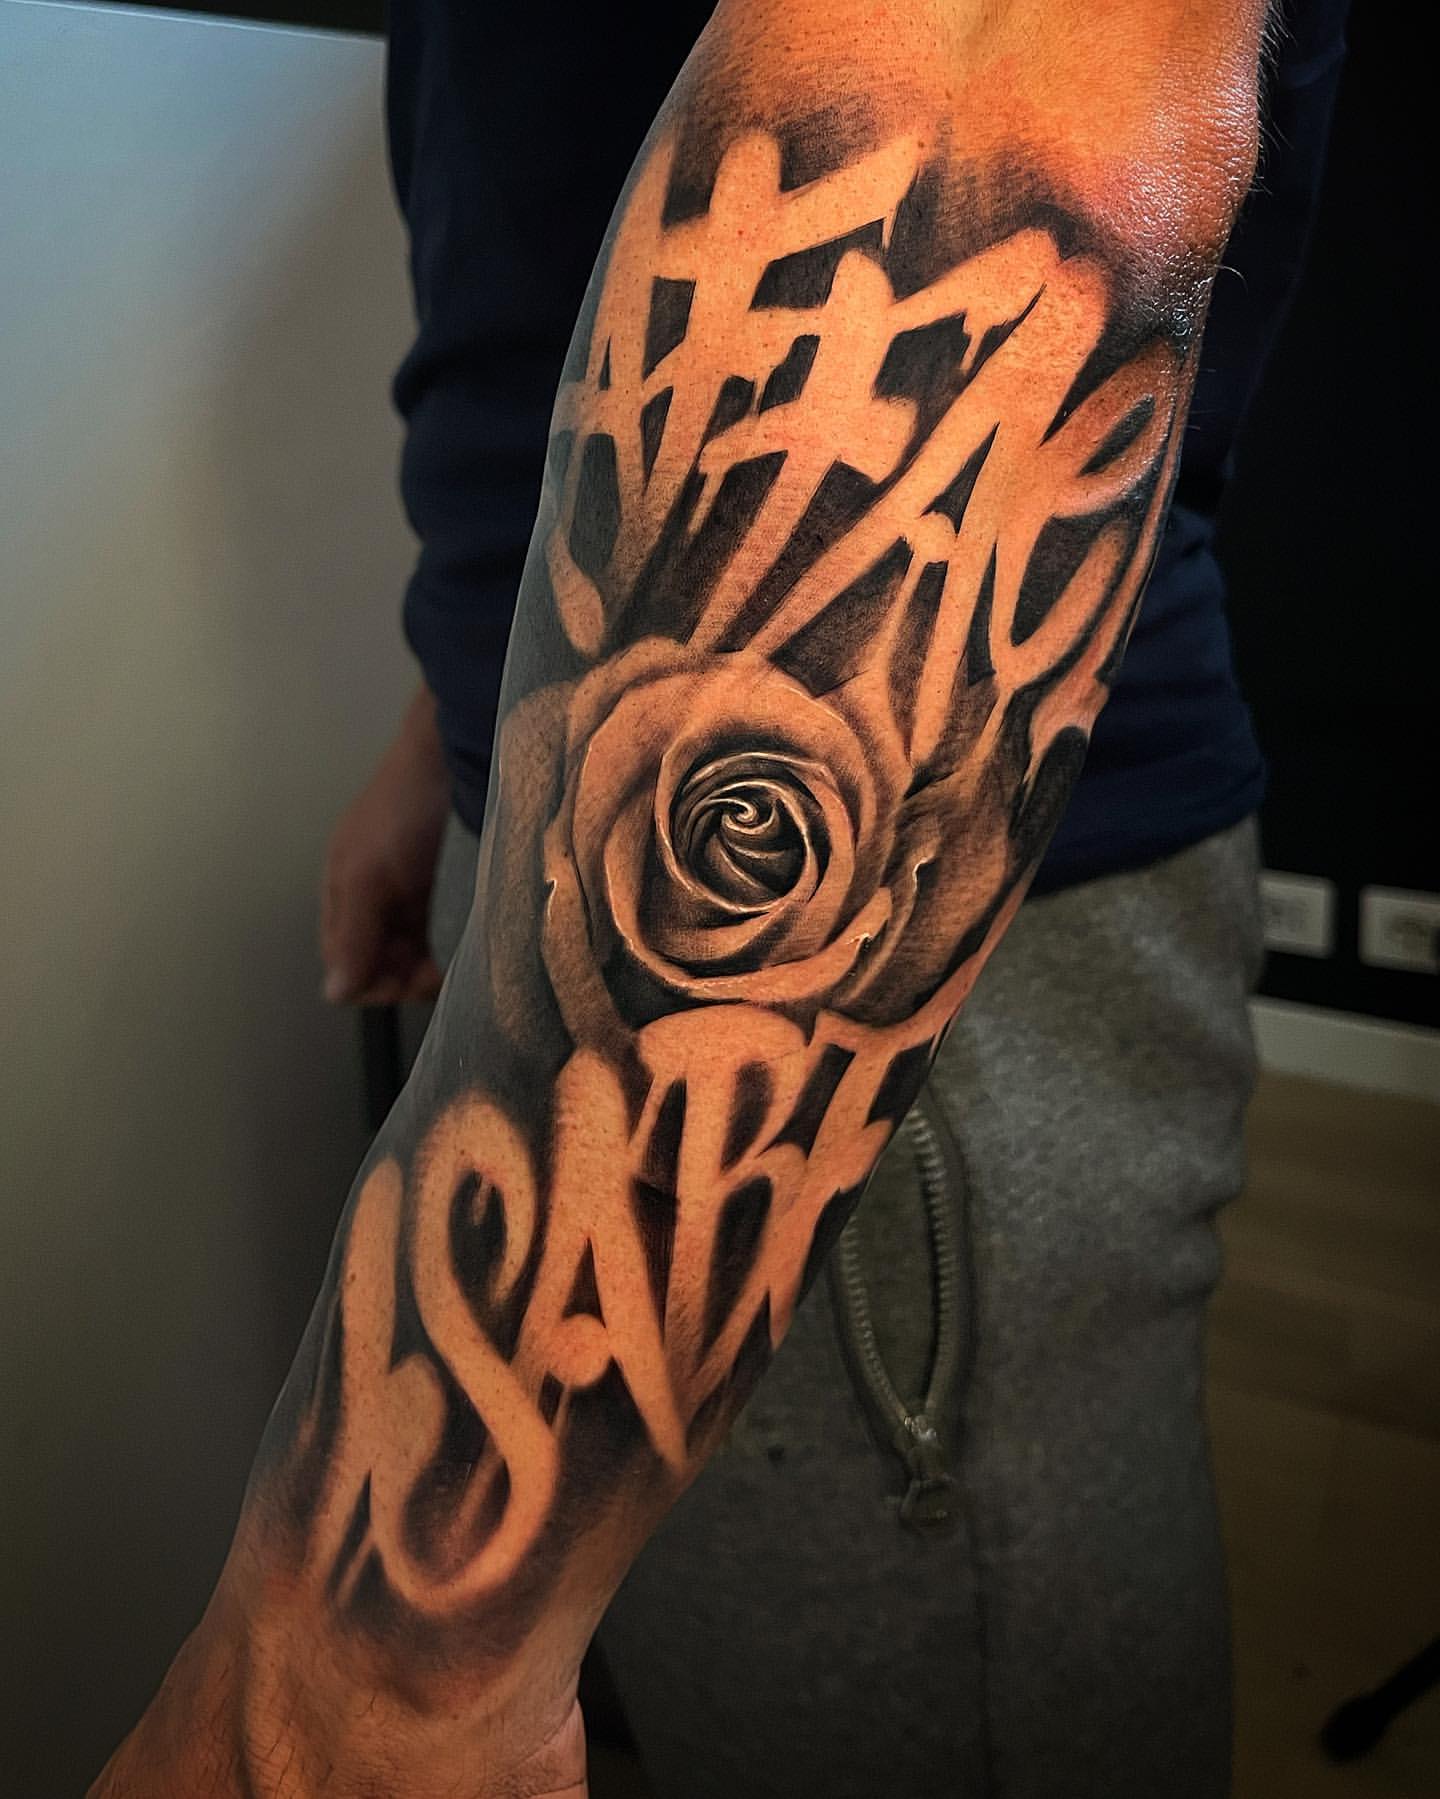 Start of a family sleeve with... - Brotherhood tattoo studio | Facebook